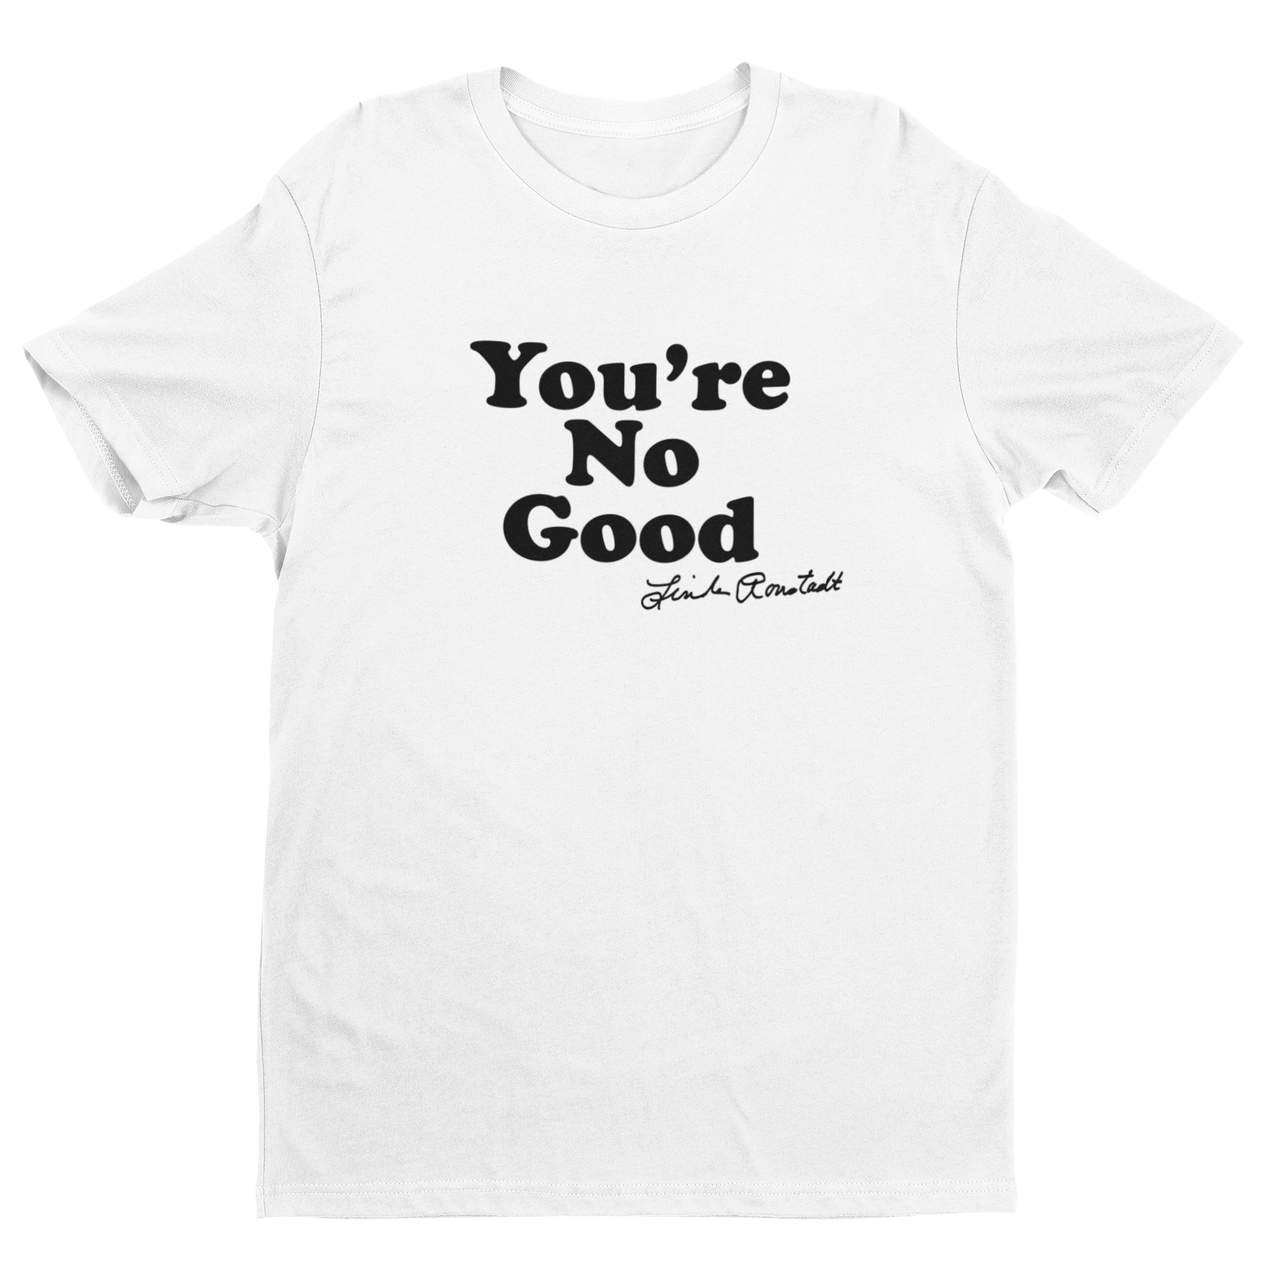 "You're No Good" Tee - White/Black